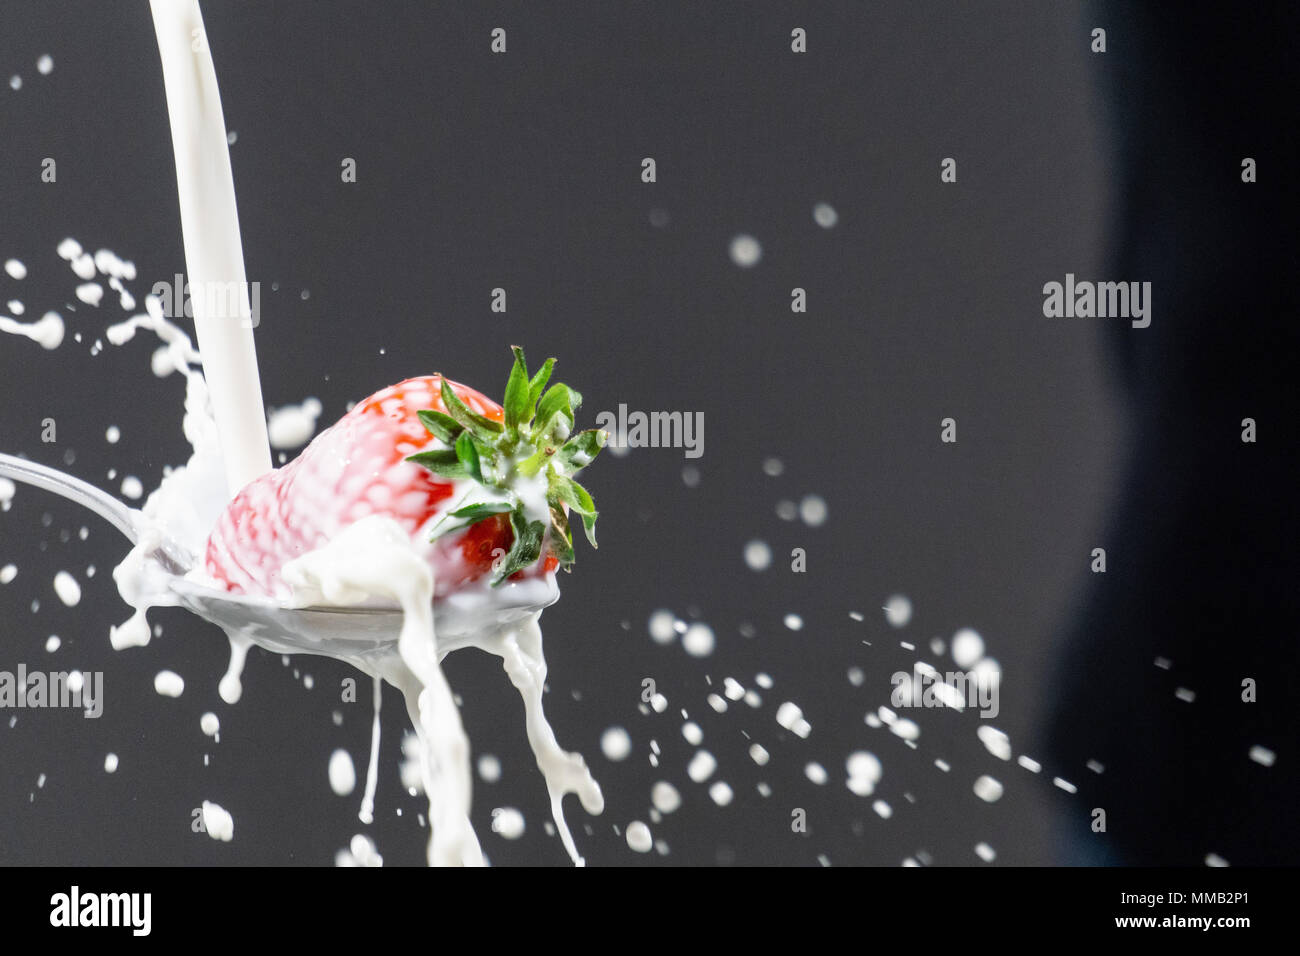 Strawberry with milk. Splash photography Stock Photo